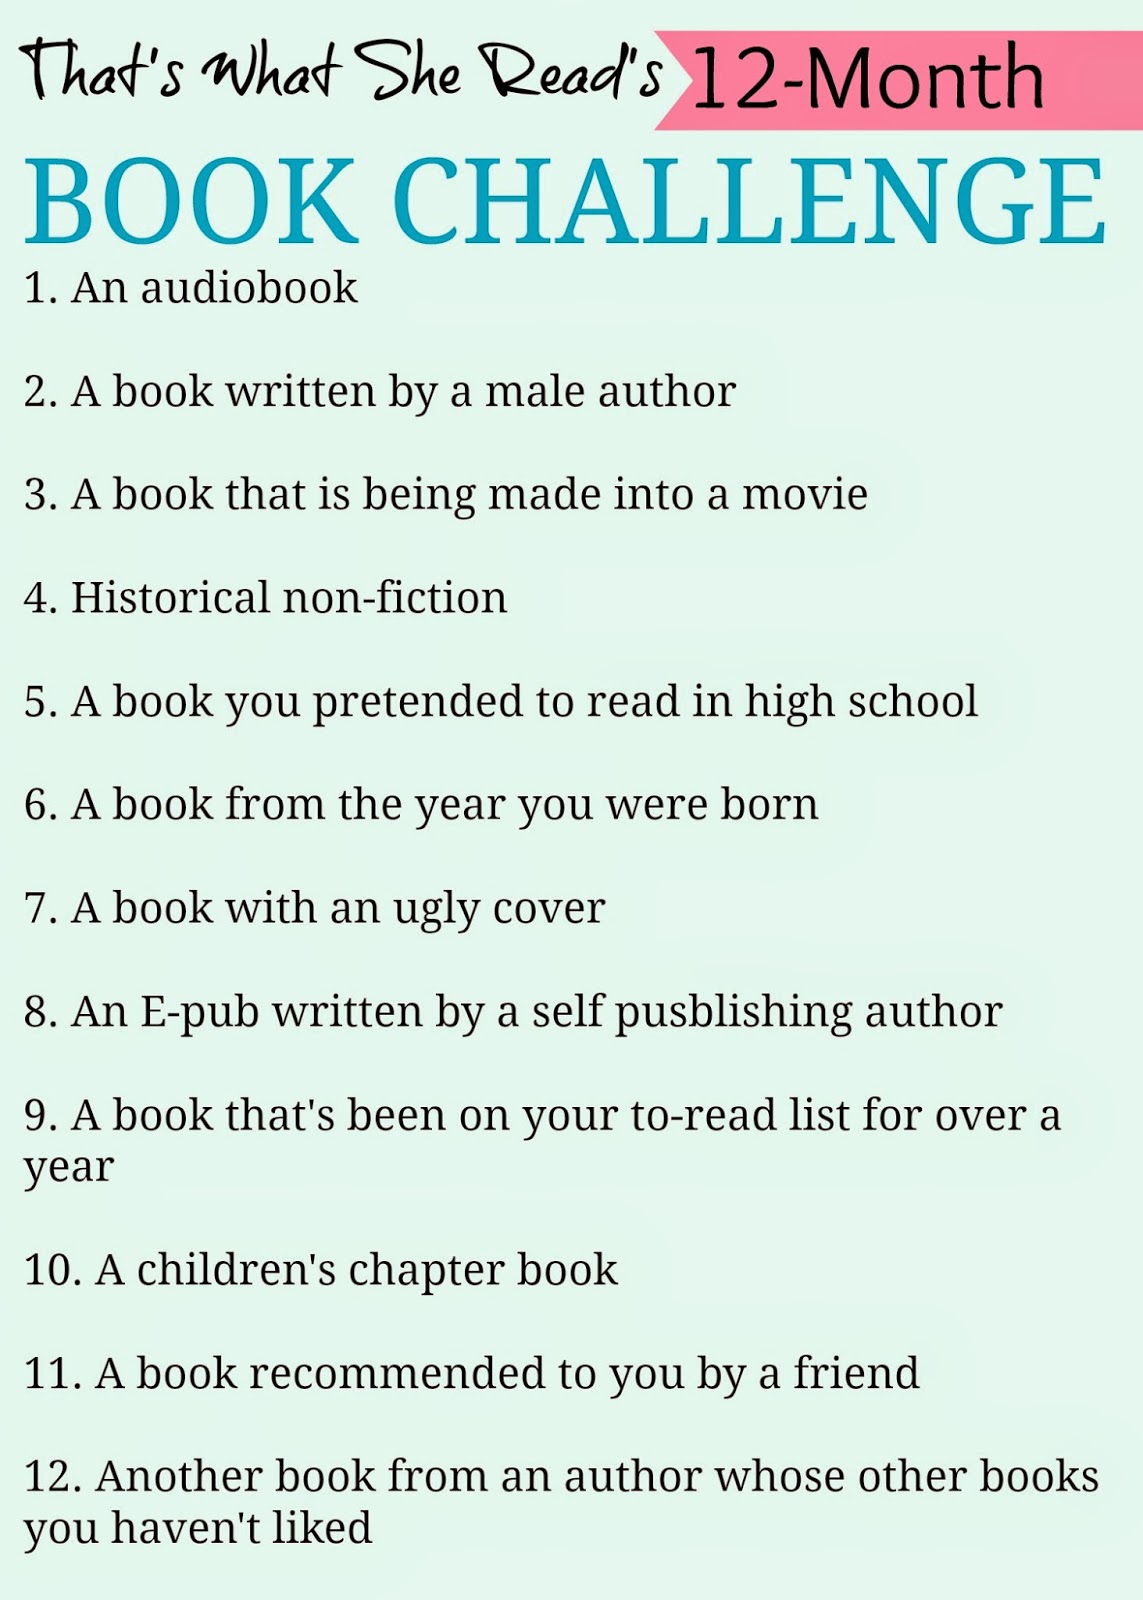 My 12-Month Book Challenge